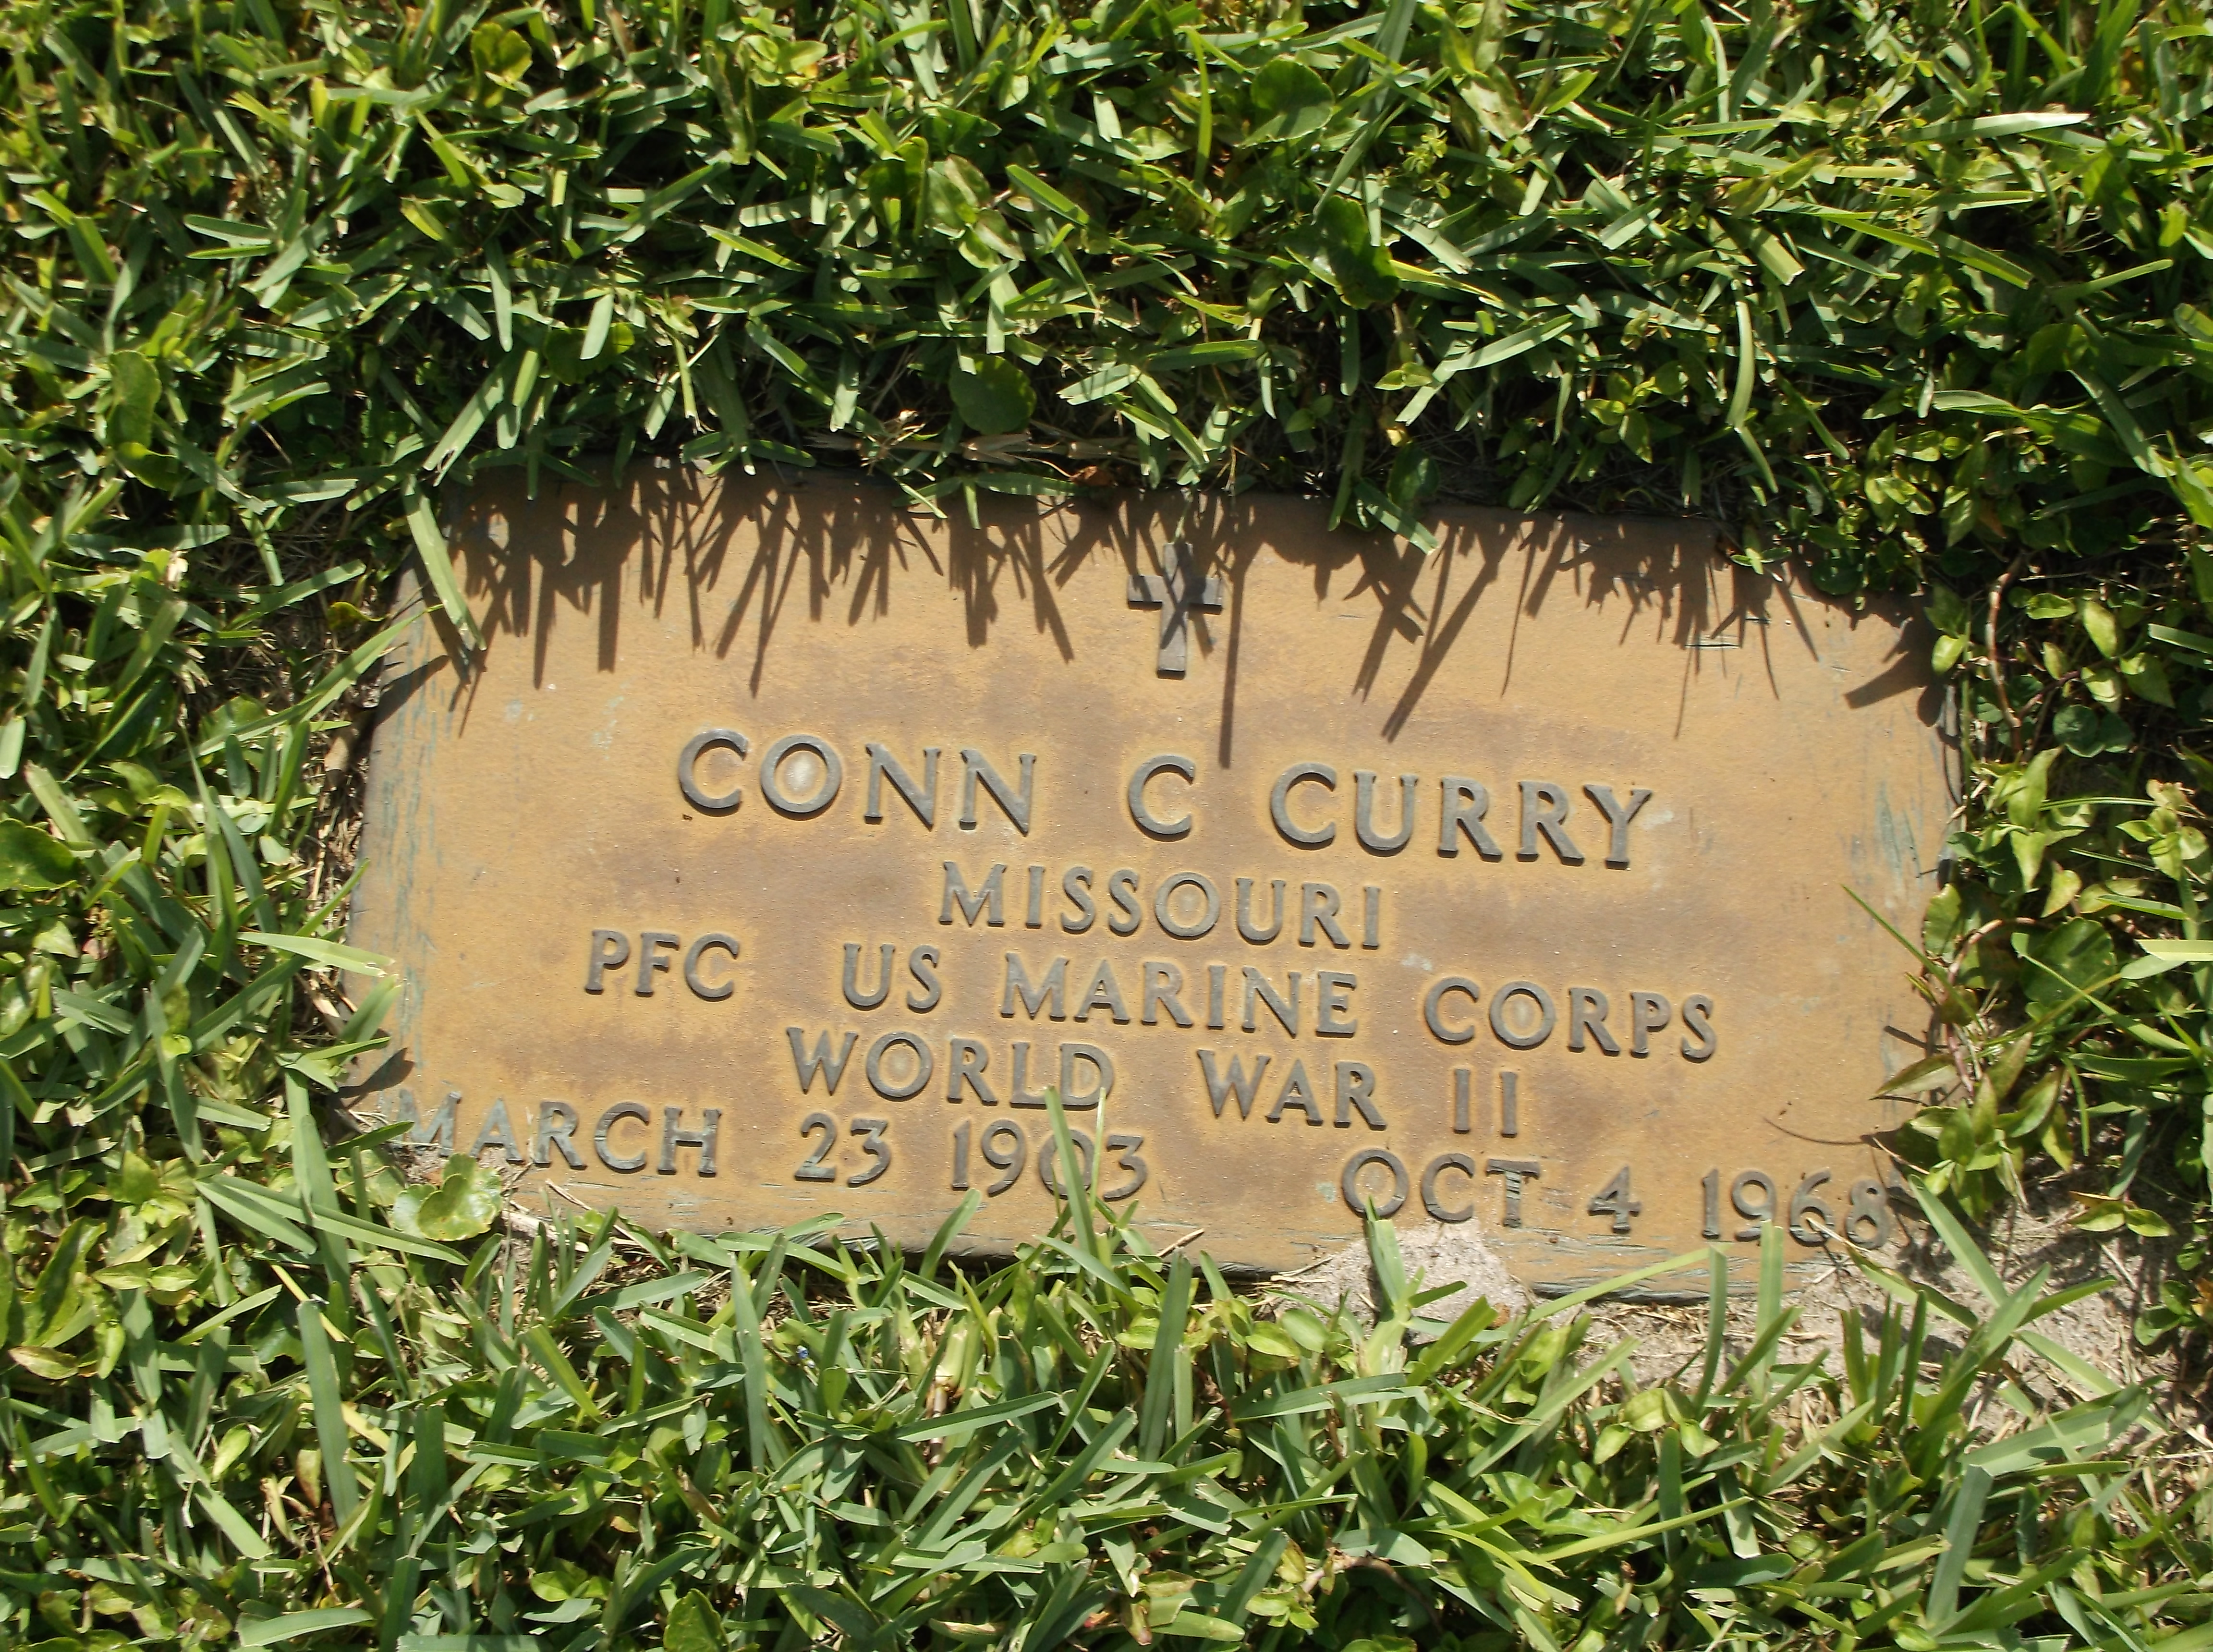 Conn C Curry